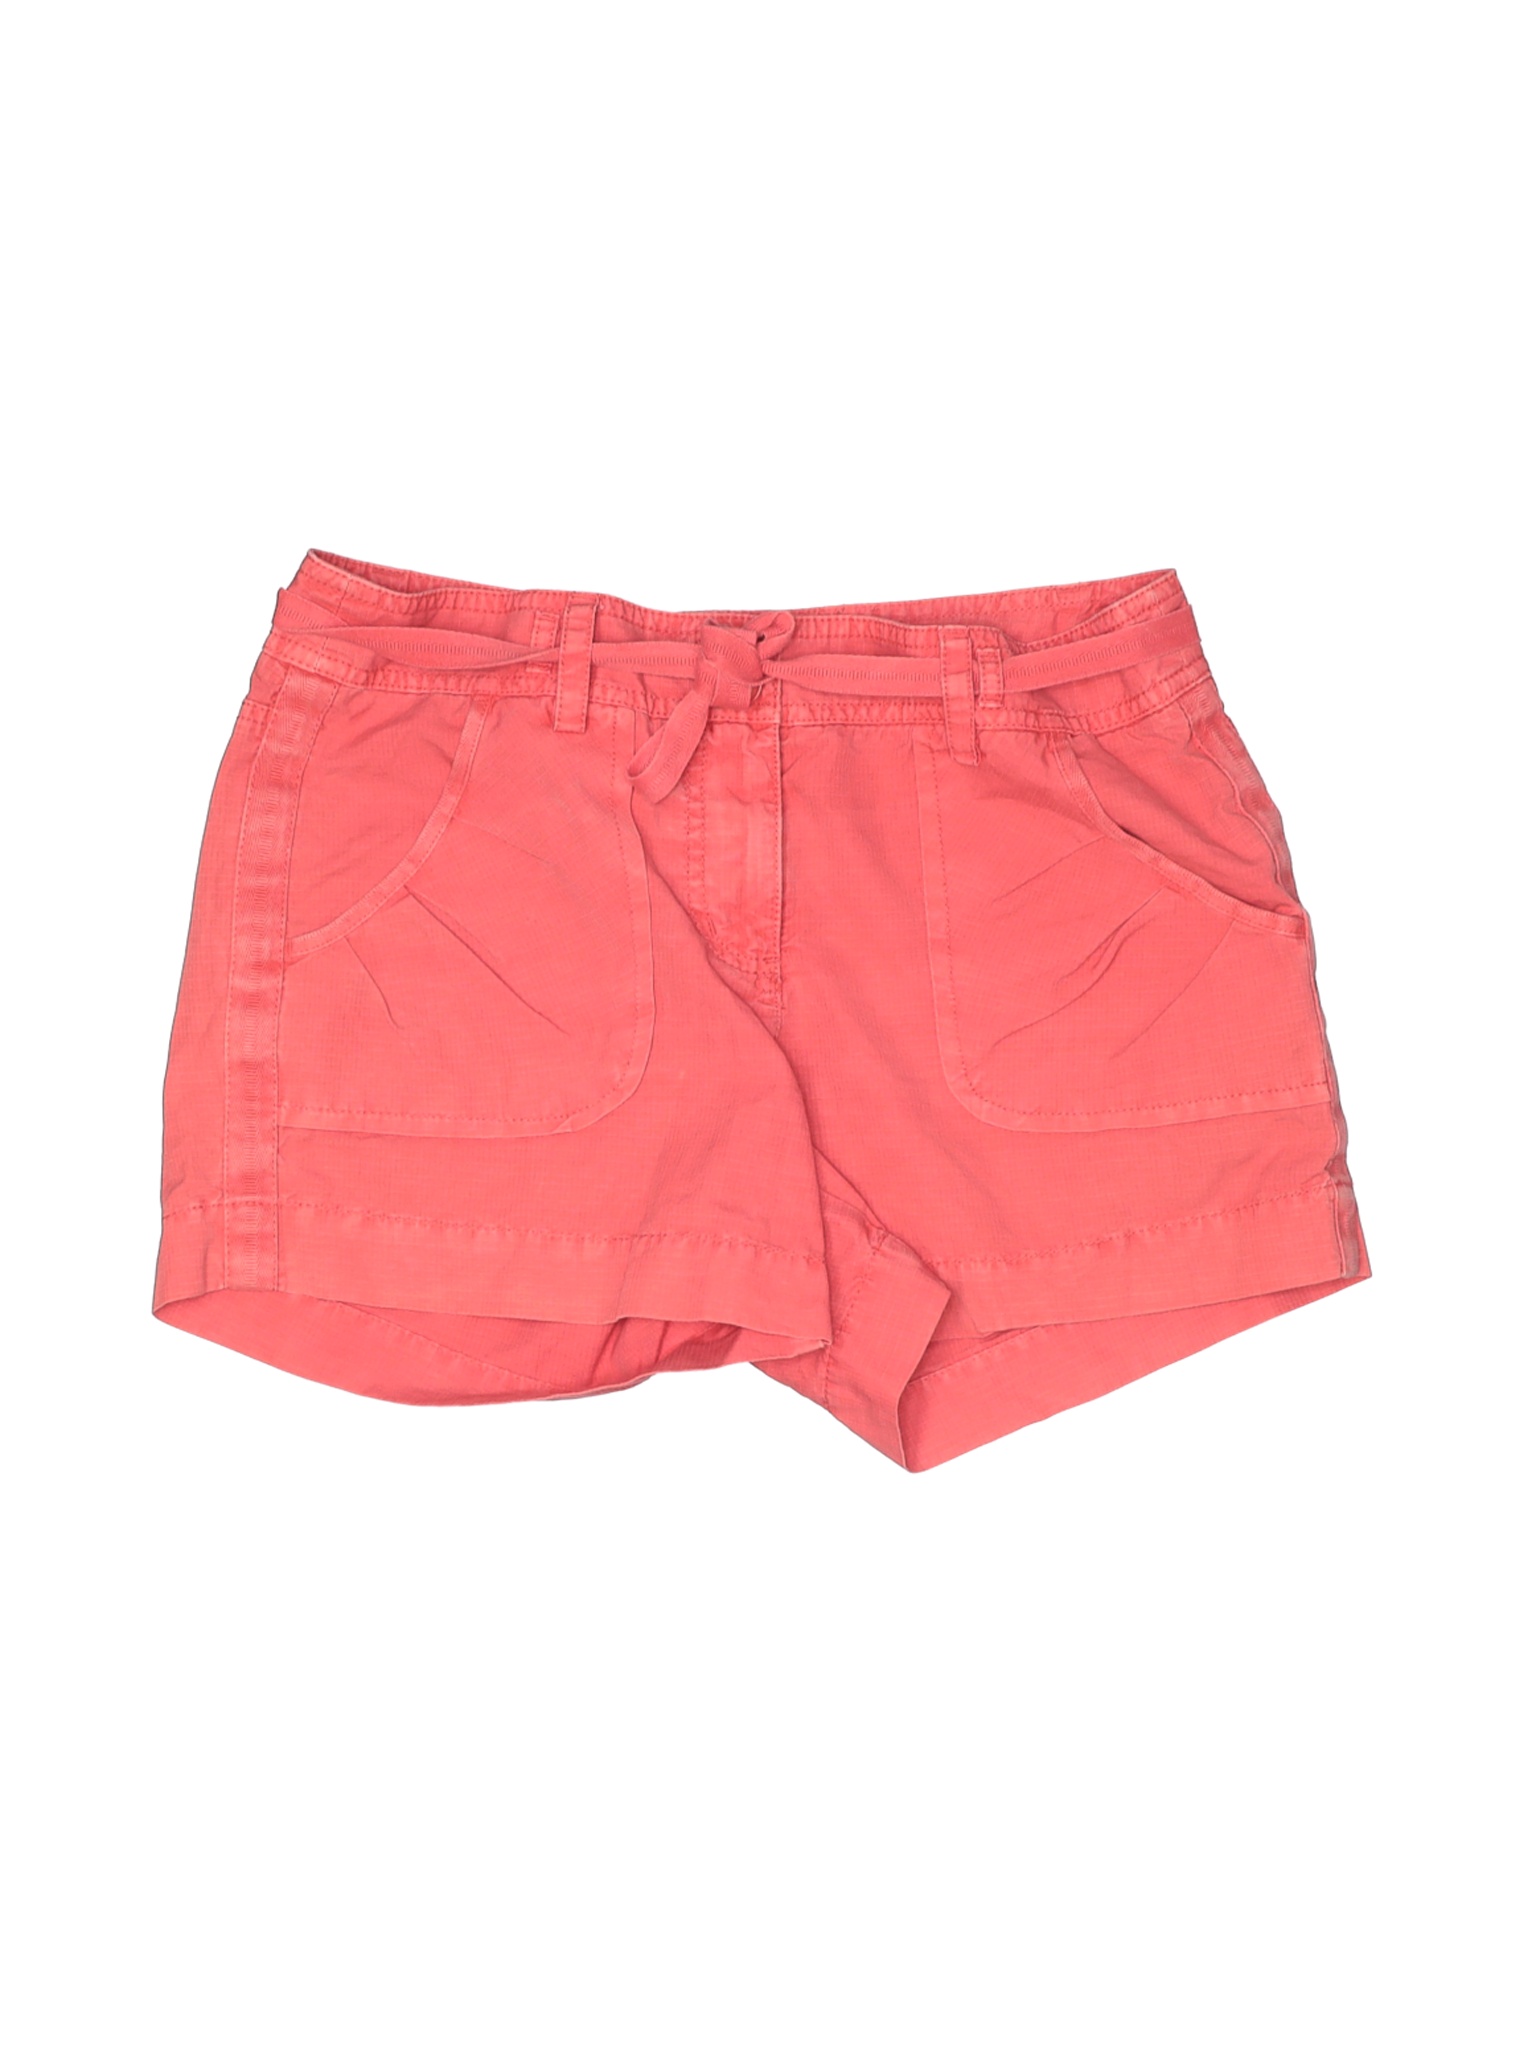 J.Crew Women Pink Shorts 4 | eBay